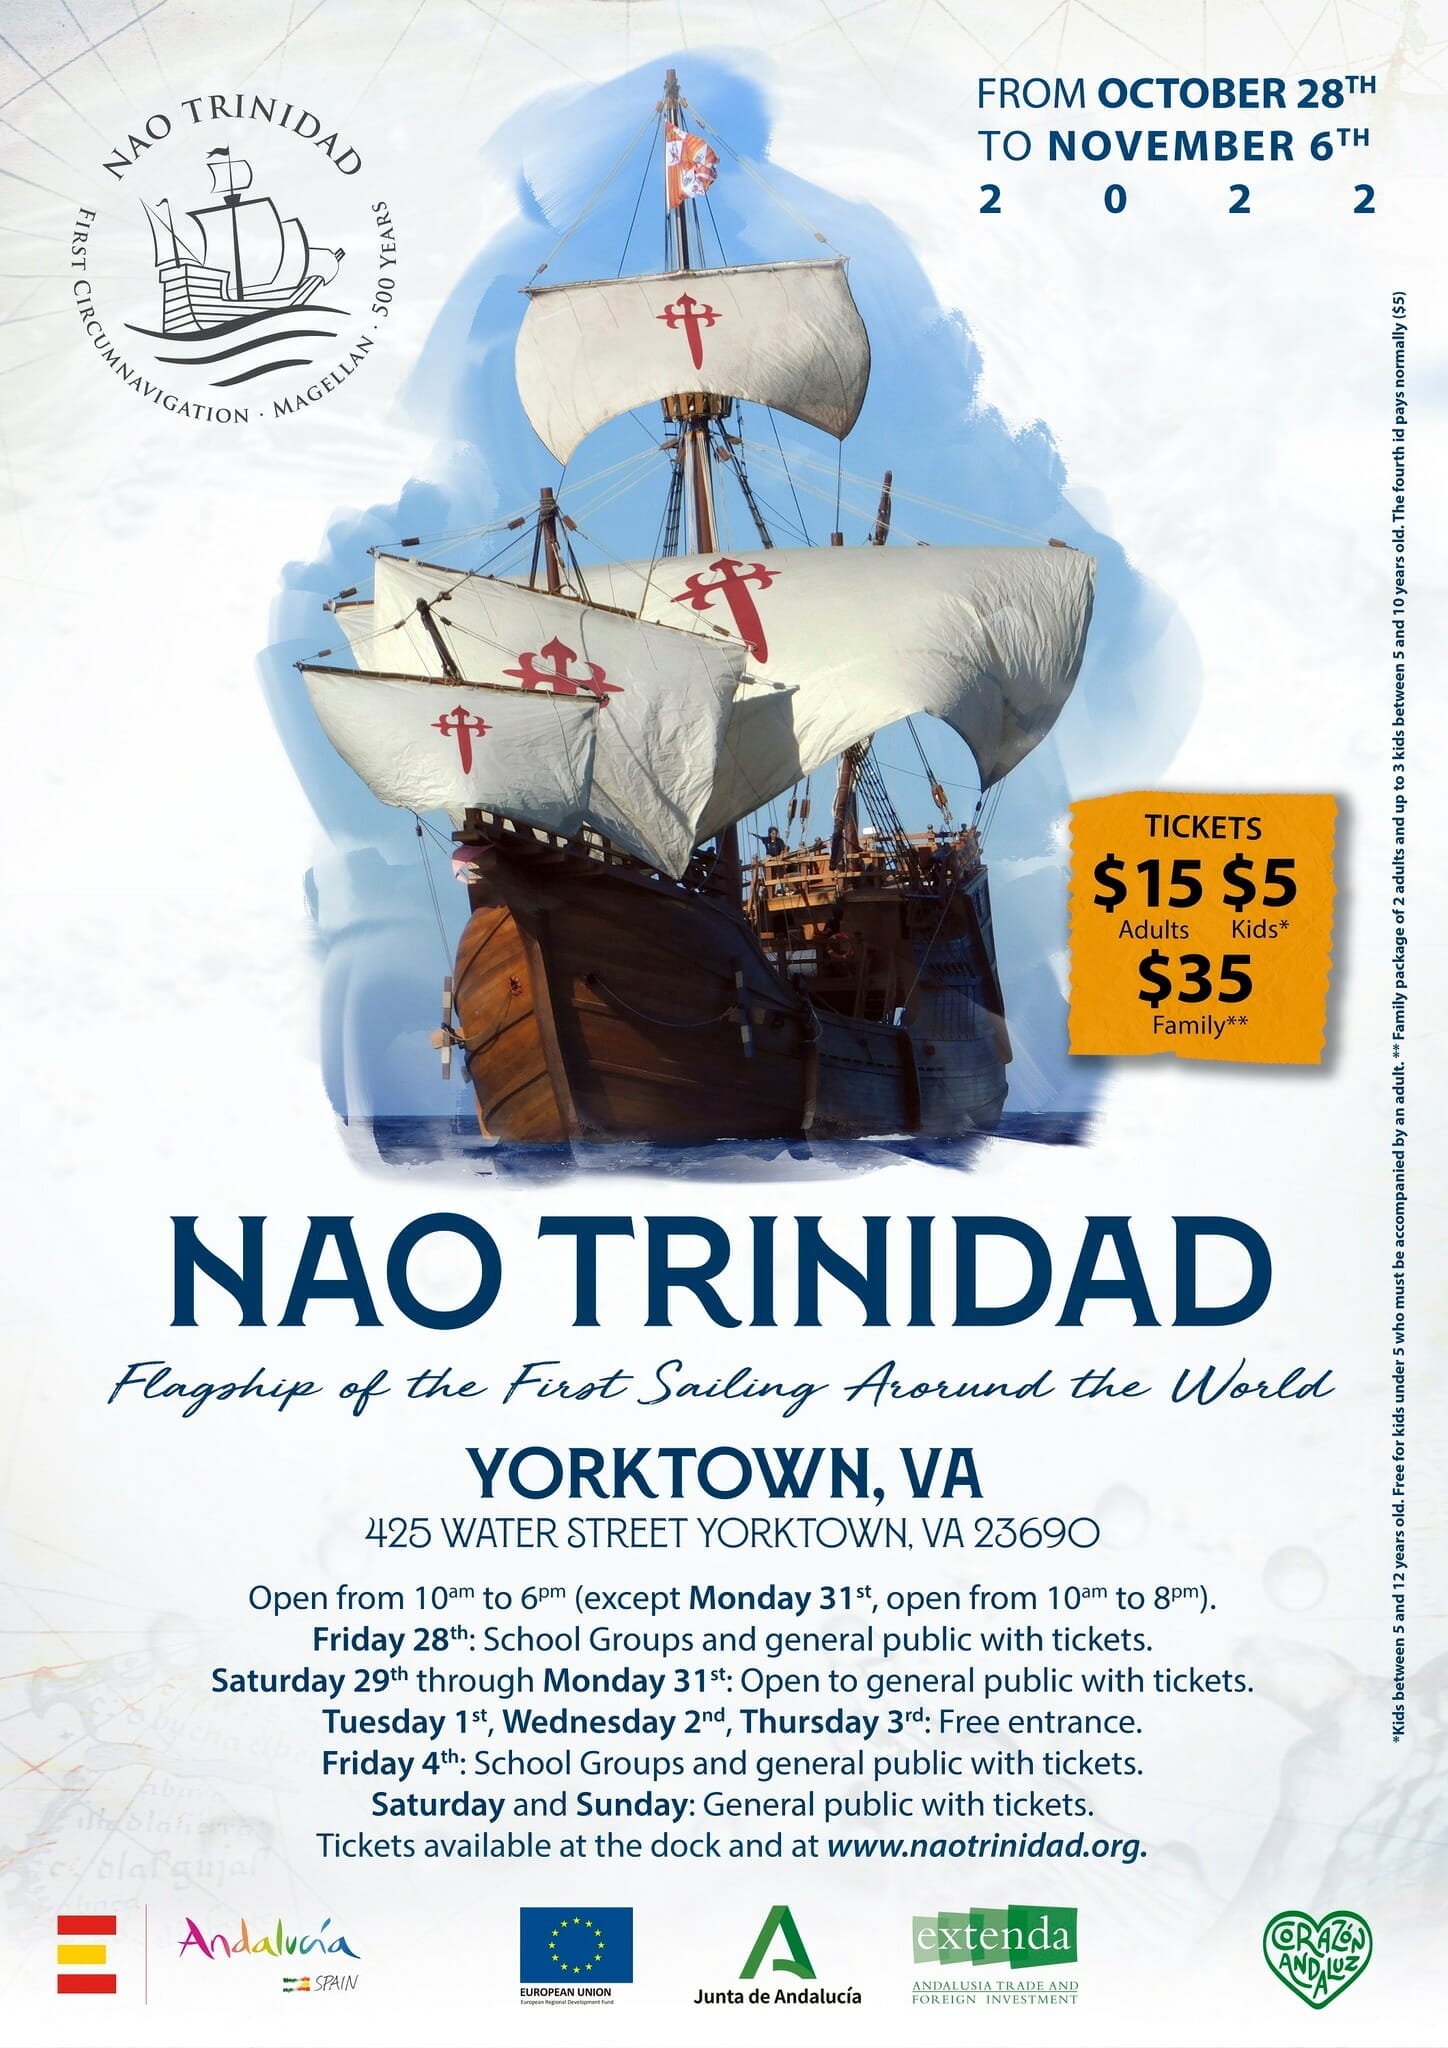 Tall Ship The Nao Trinidad Visits Yorktown (Free Tours